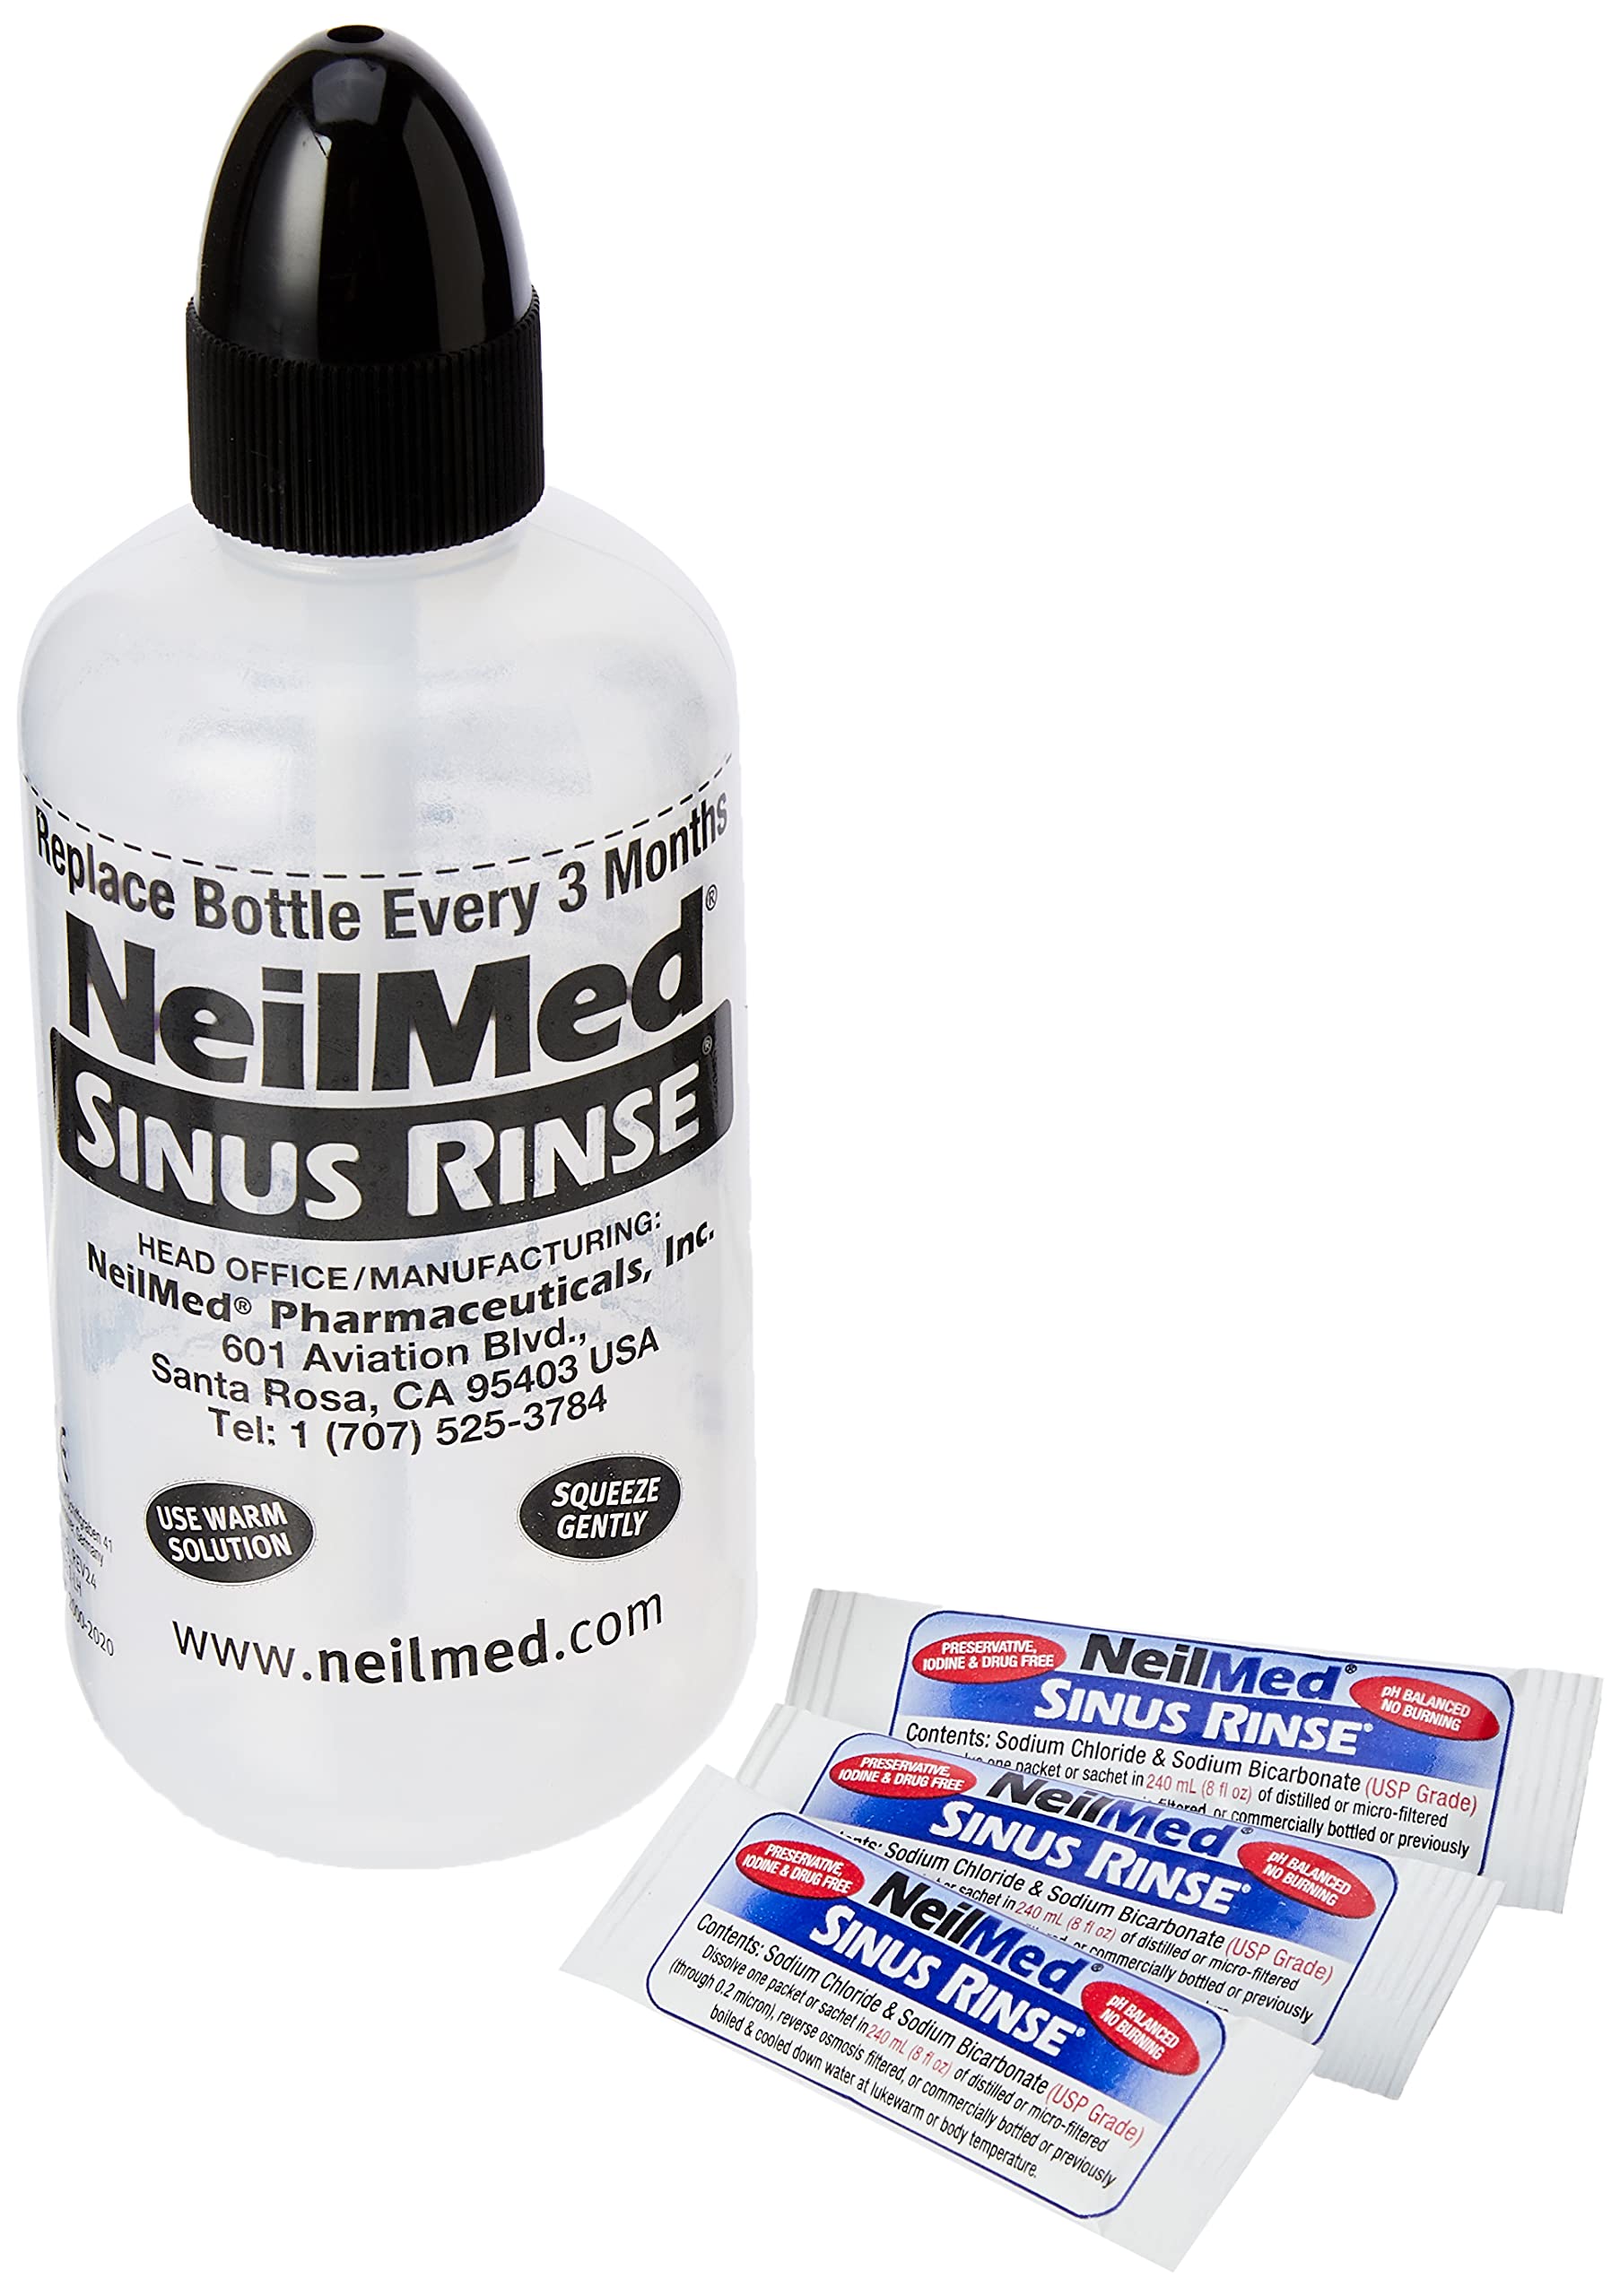 Neilmed Sinus Rinse Saline Nasal Rinse Kit, 5 Packets